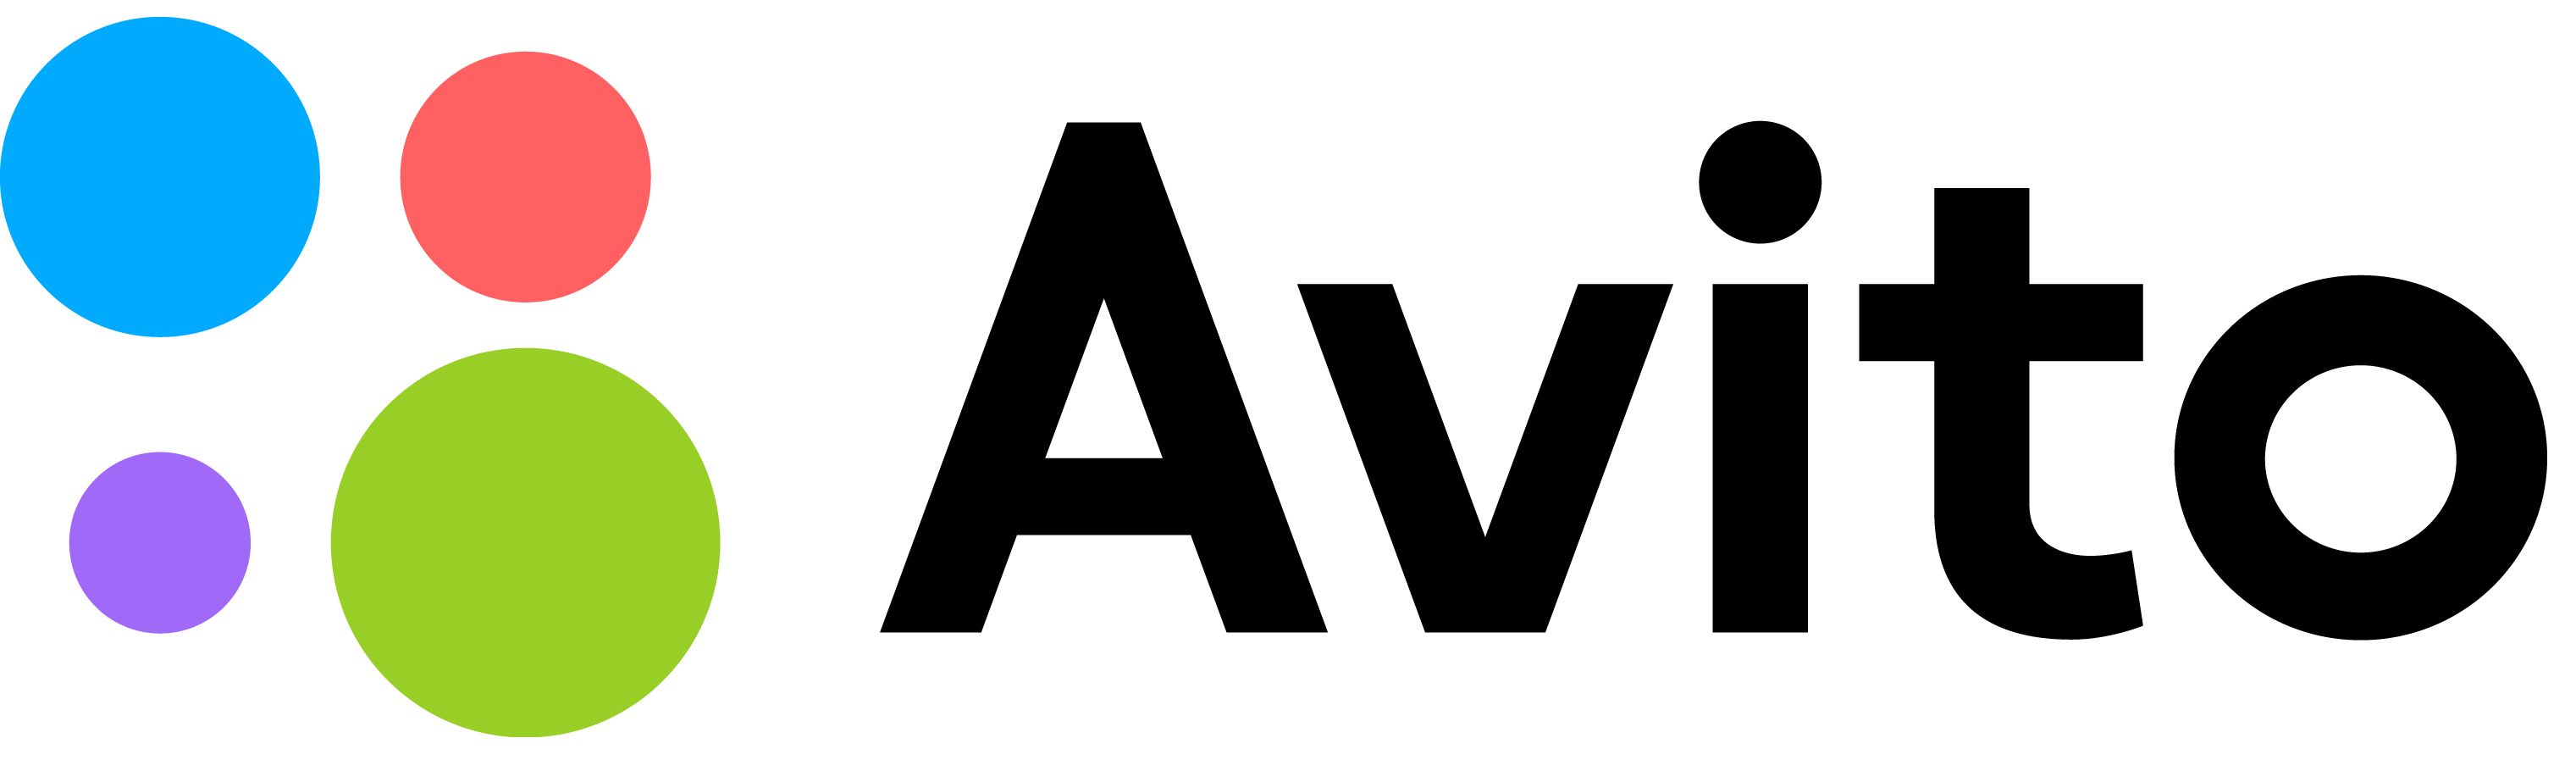 1 ch ru. Avito логотип. Логотип авито на прозрачном фоне. Авито маркетплейс. Авито картинка.